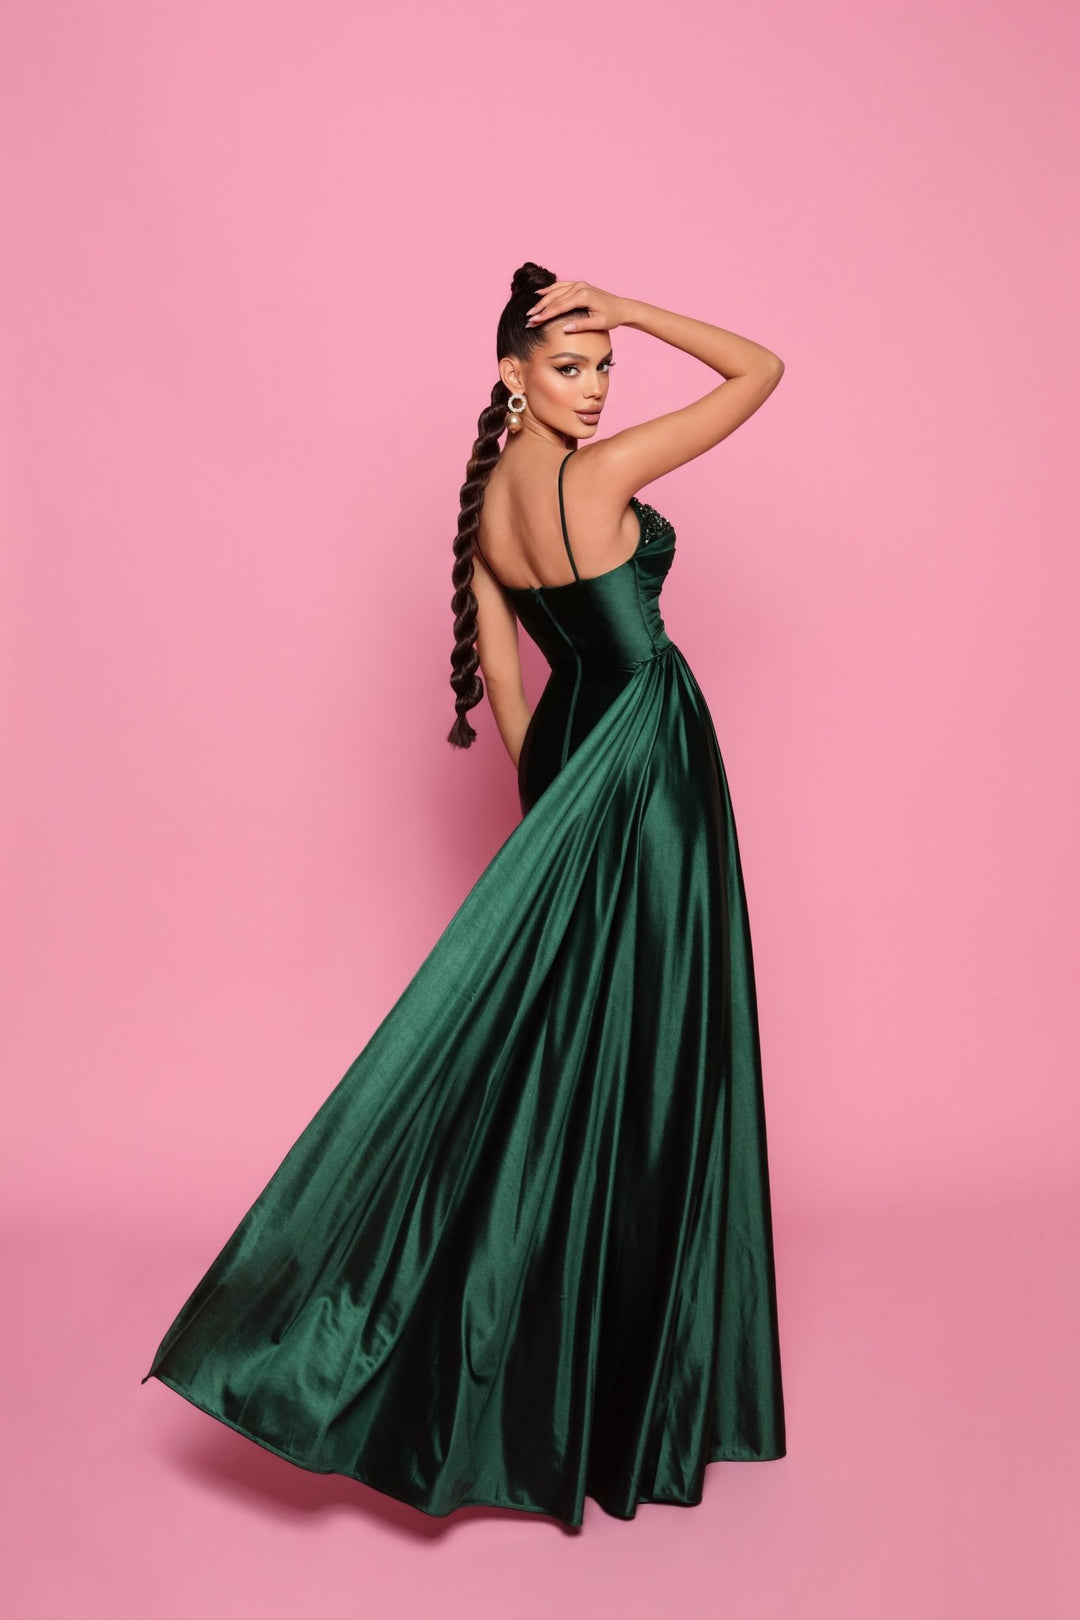 Rio Dress by Nicoletta NP153 - ElissaJay Boutique